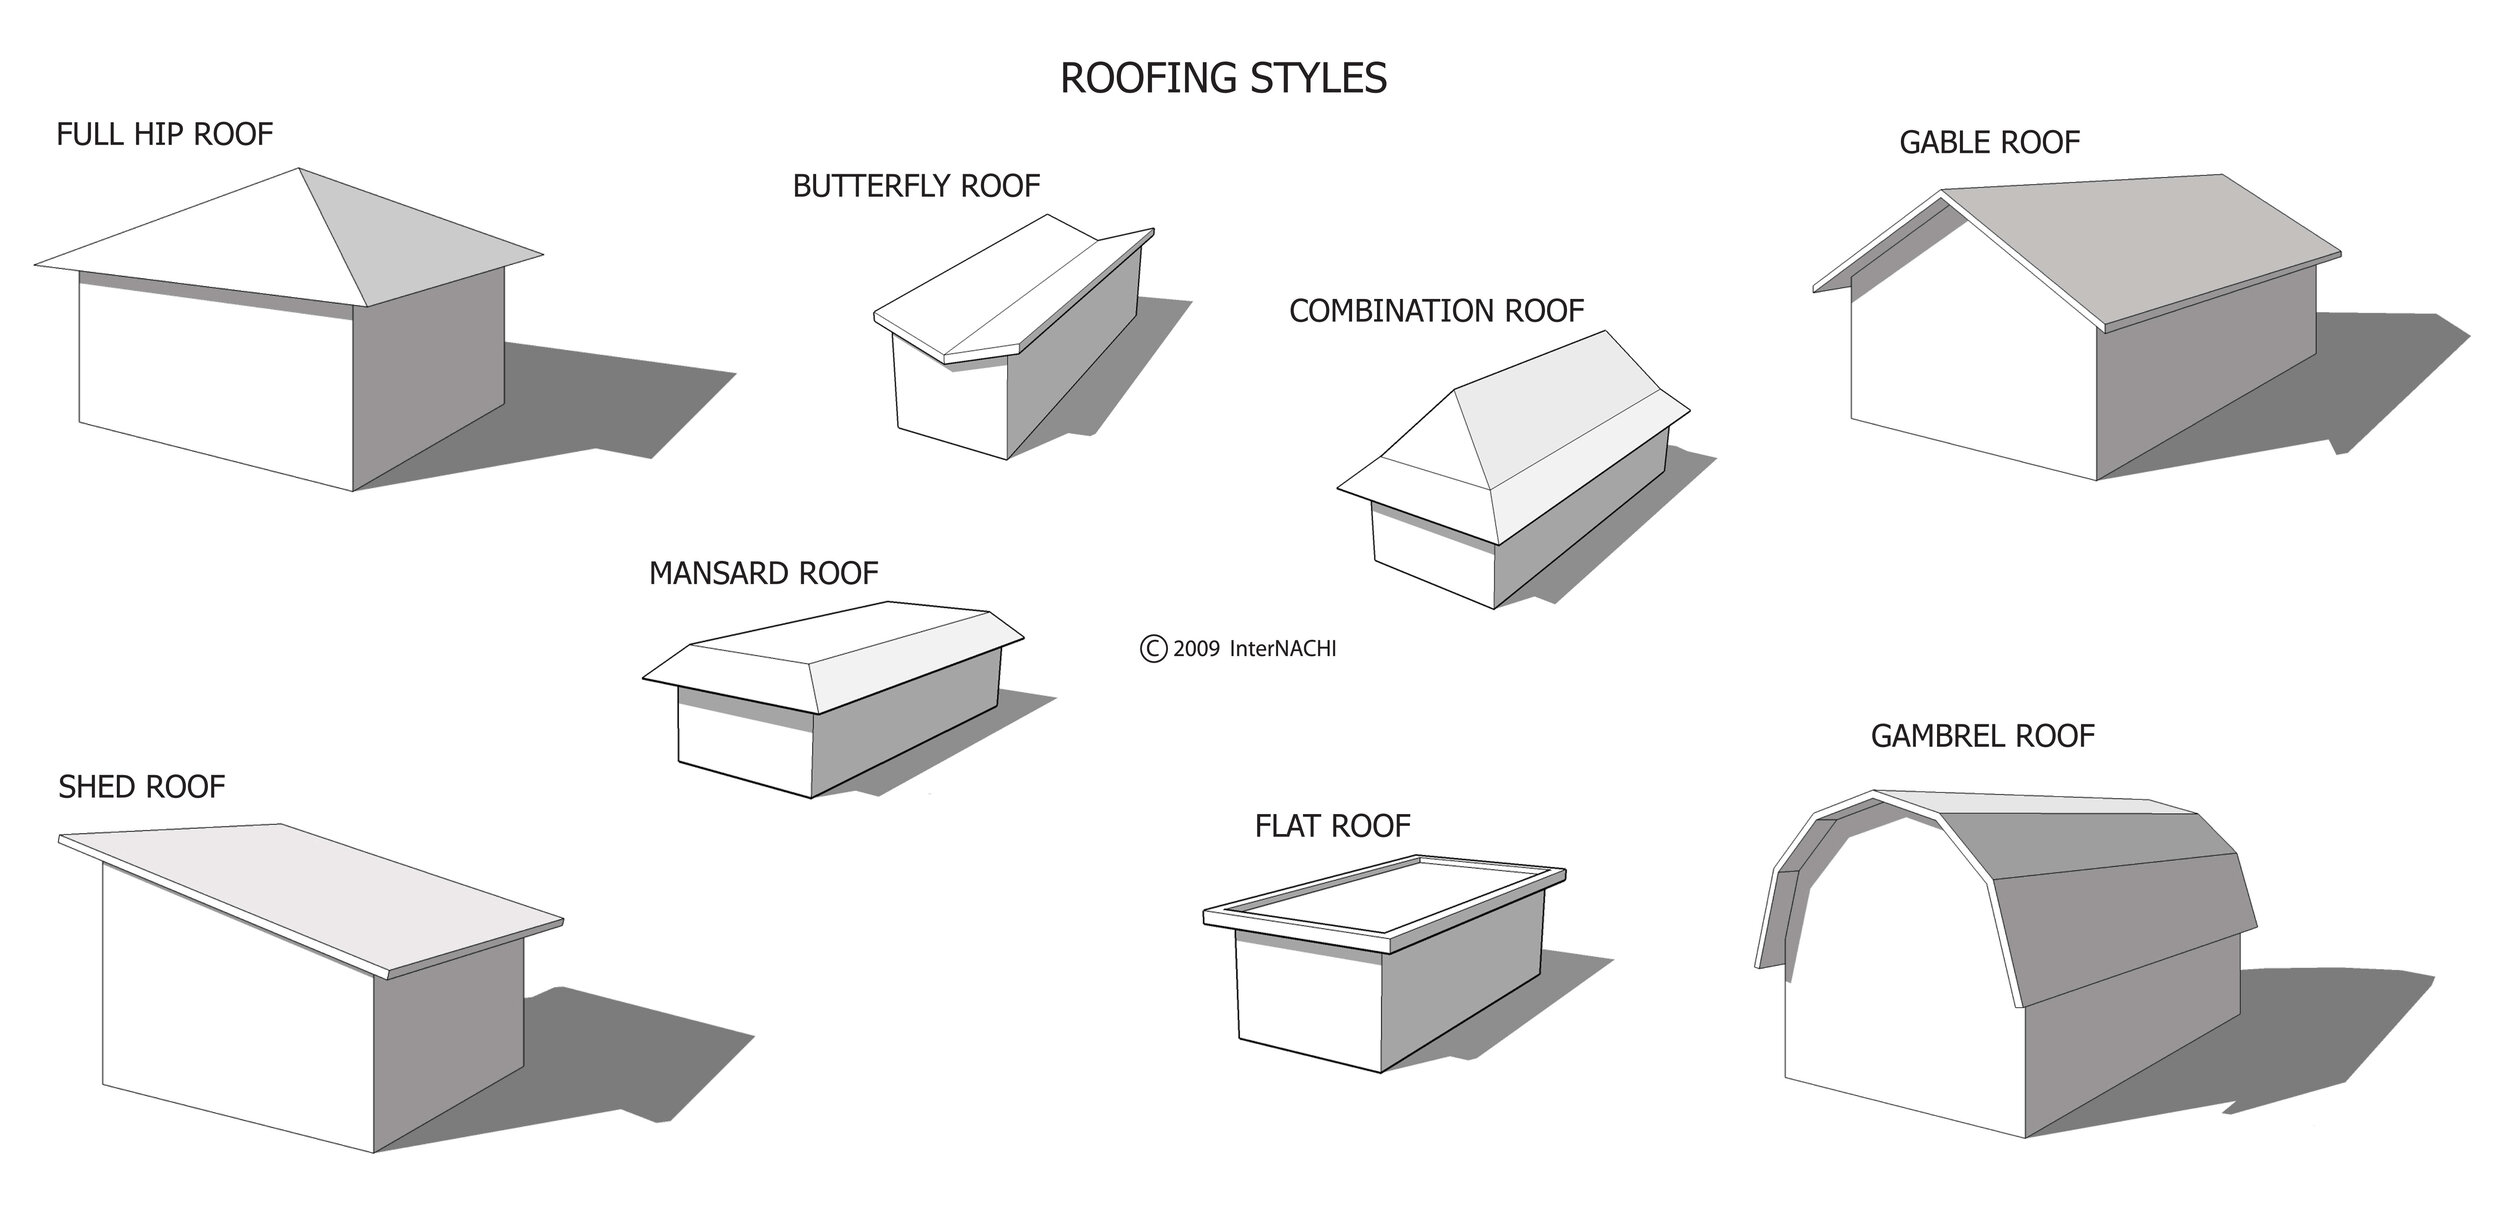 roofing-style-terminology.jpg